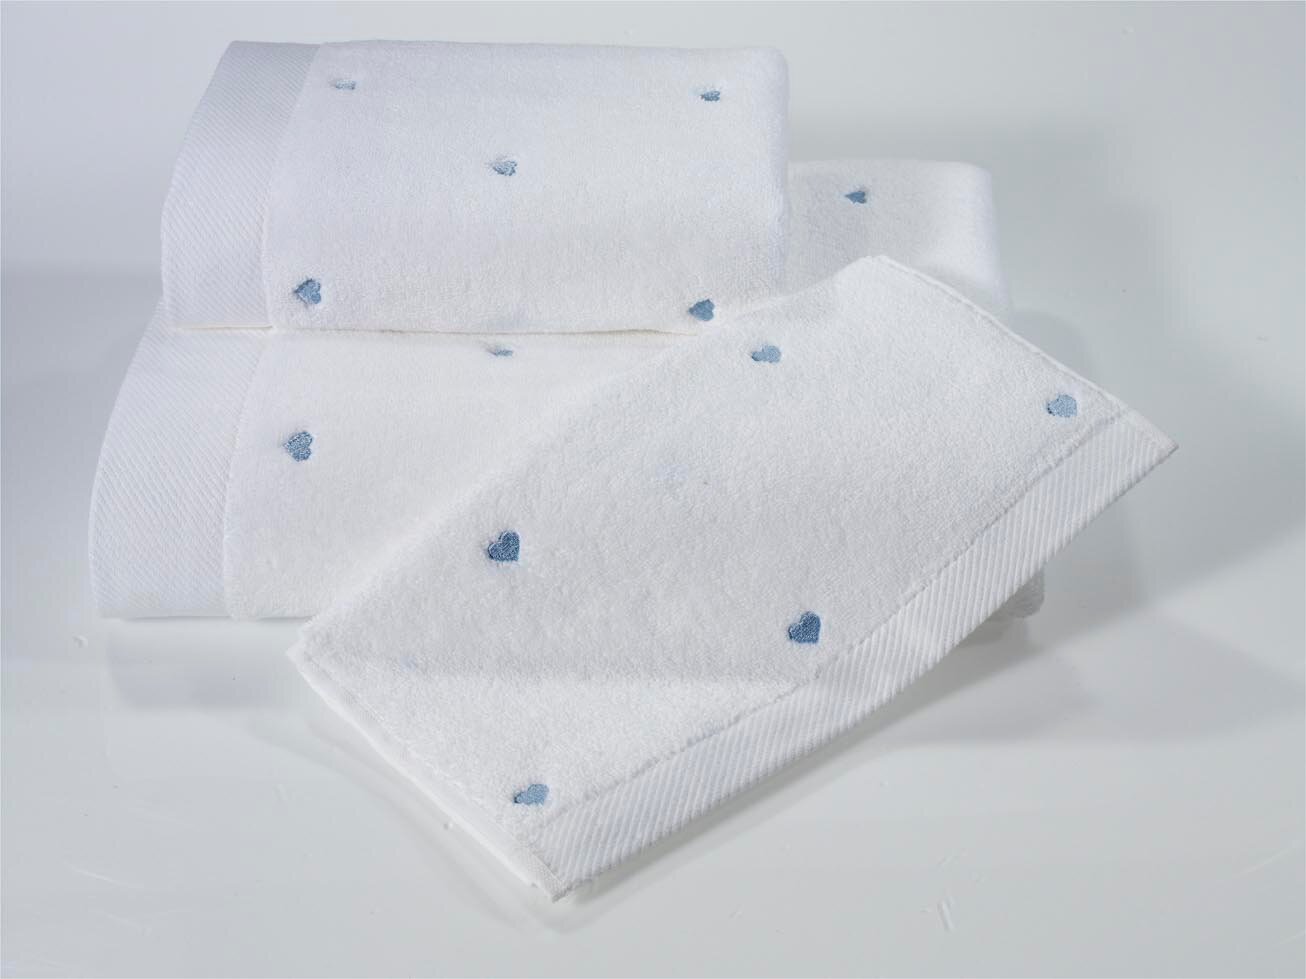 Soft cotton Полотенце Adelia цвет: белый, голубой (50х100 см)